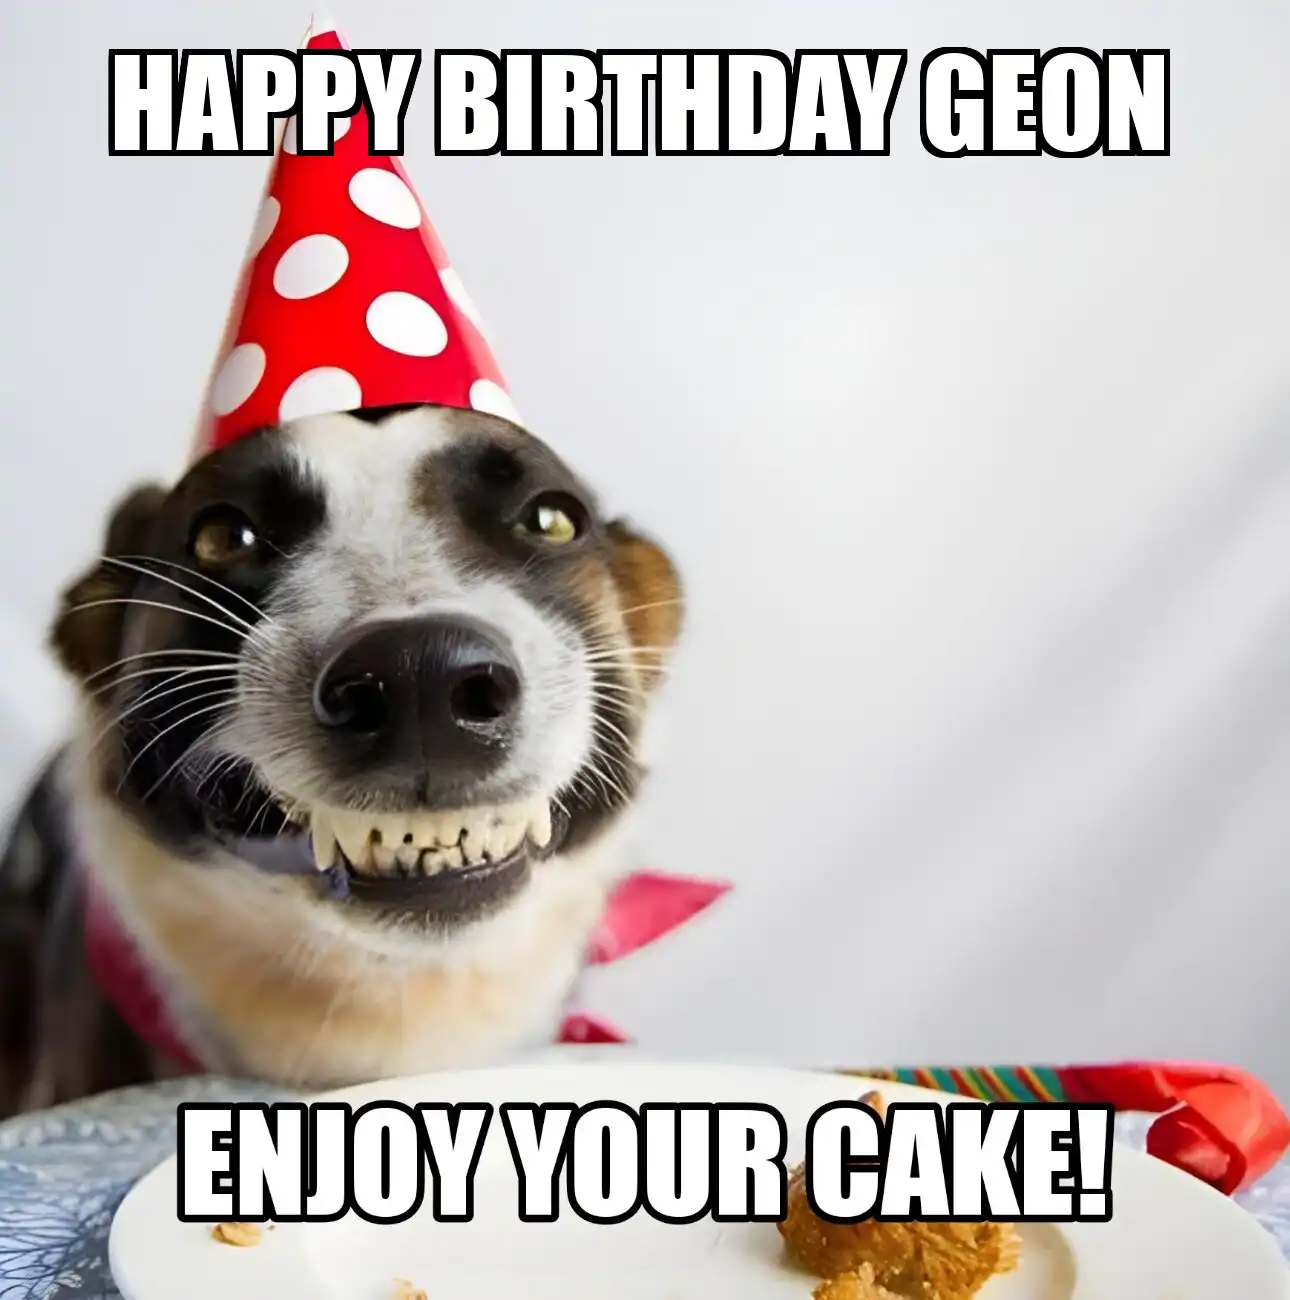 Happy Birthday Geon Enjoy Your Cake Dog Meme